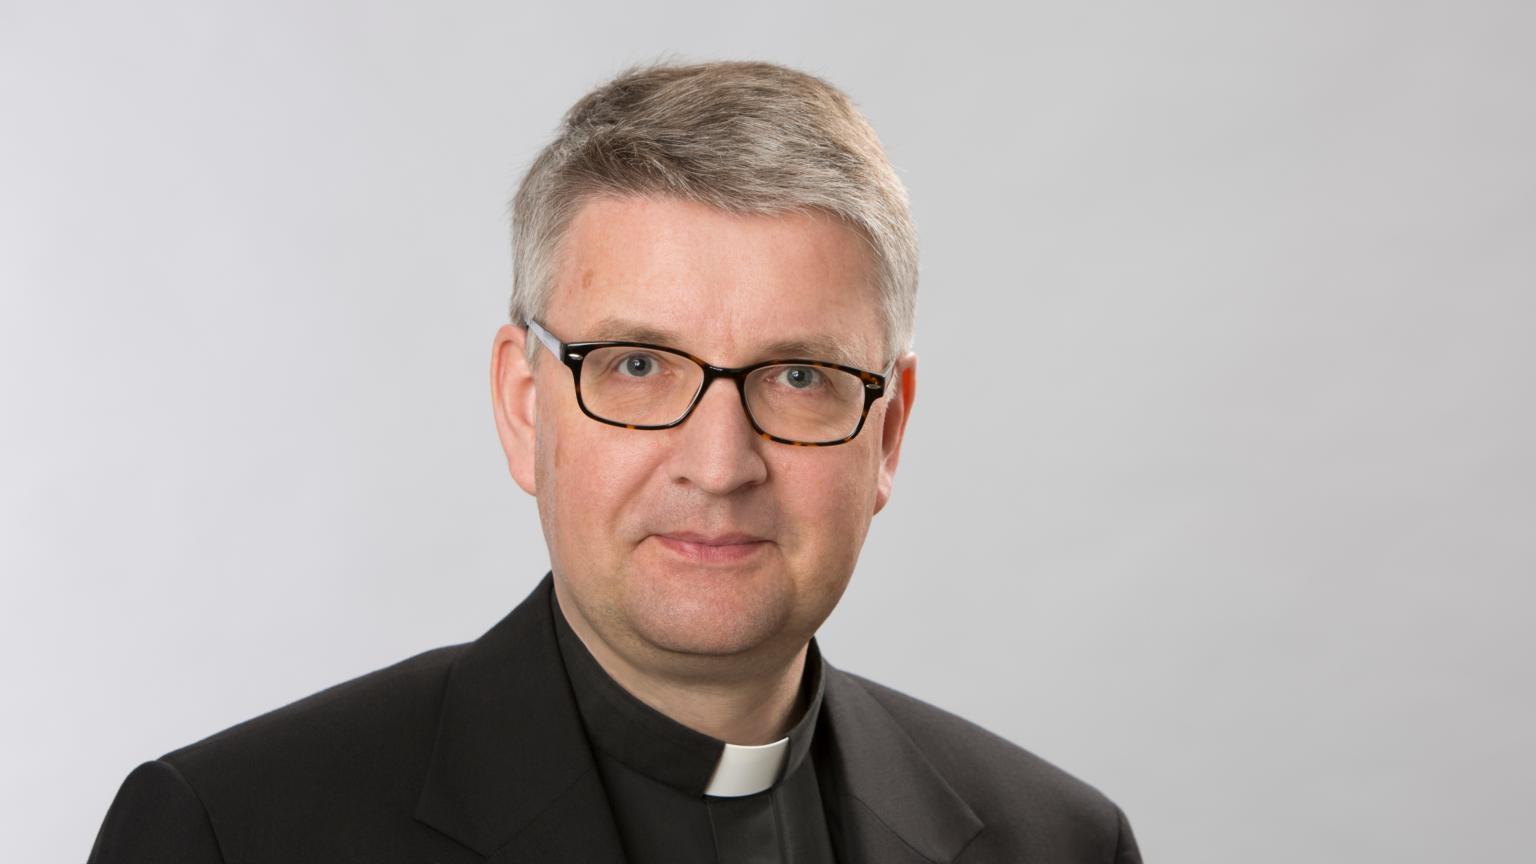 Bischof Peter Kohlgraf (c) Bistum Mainz